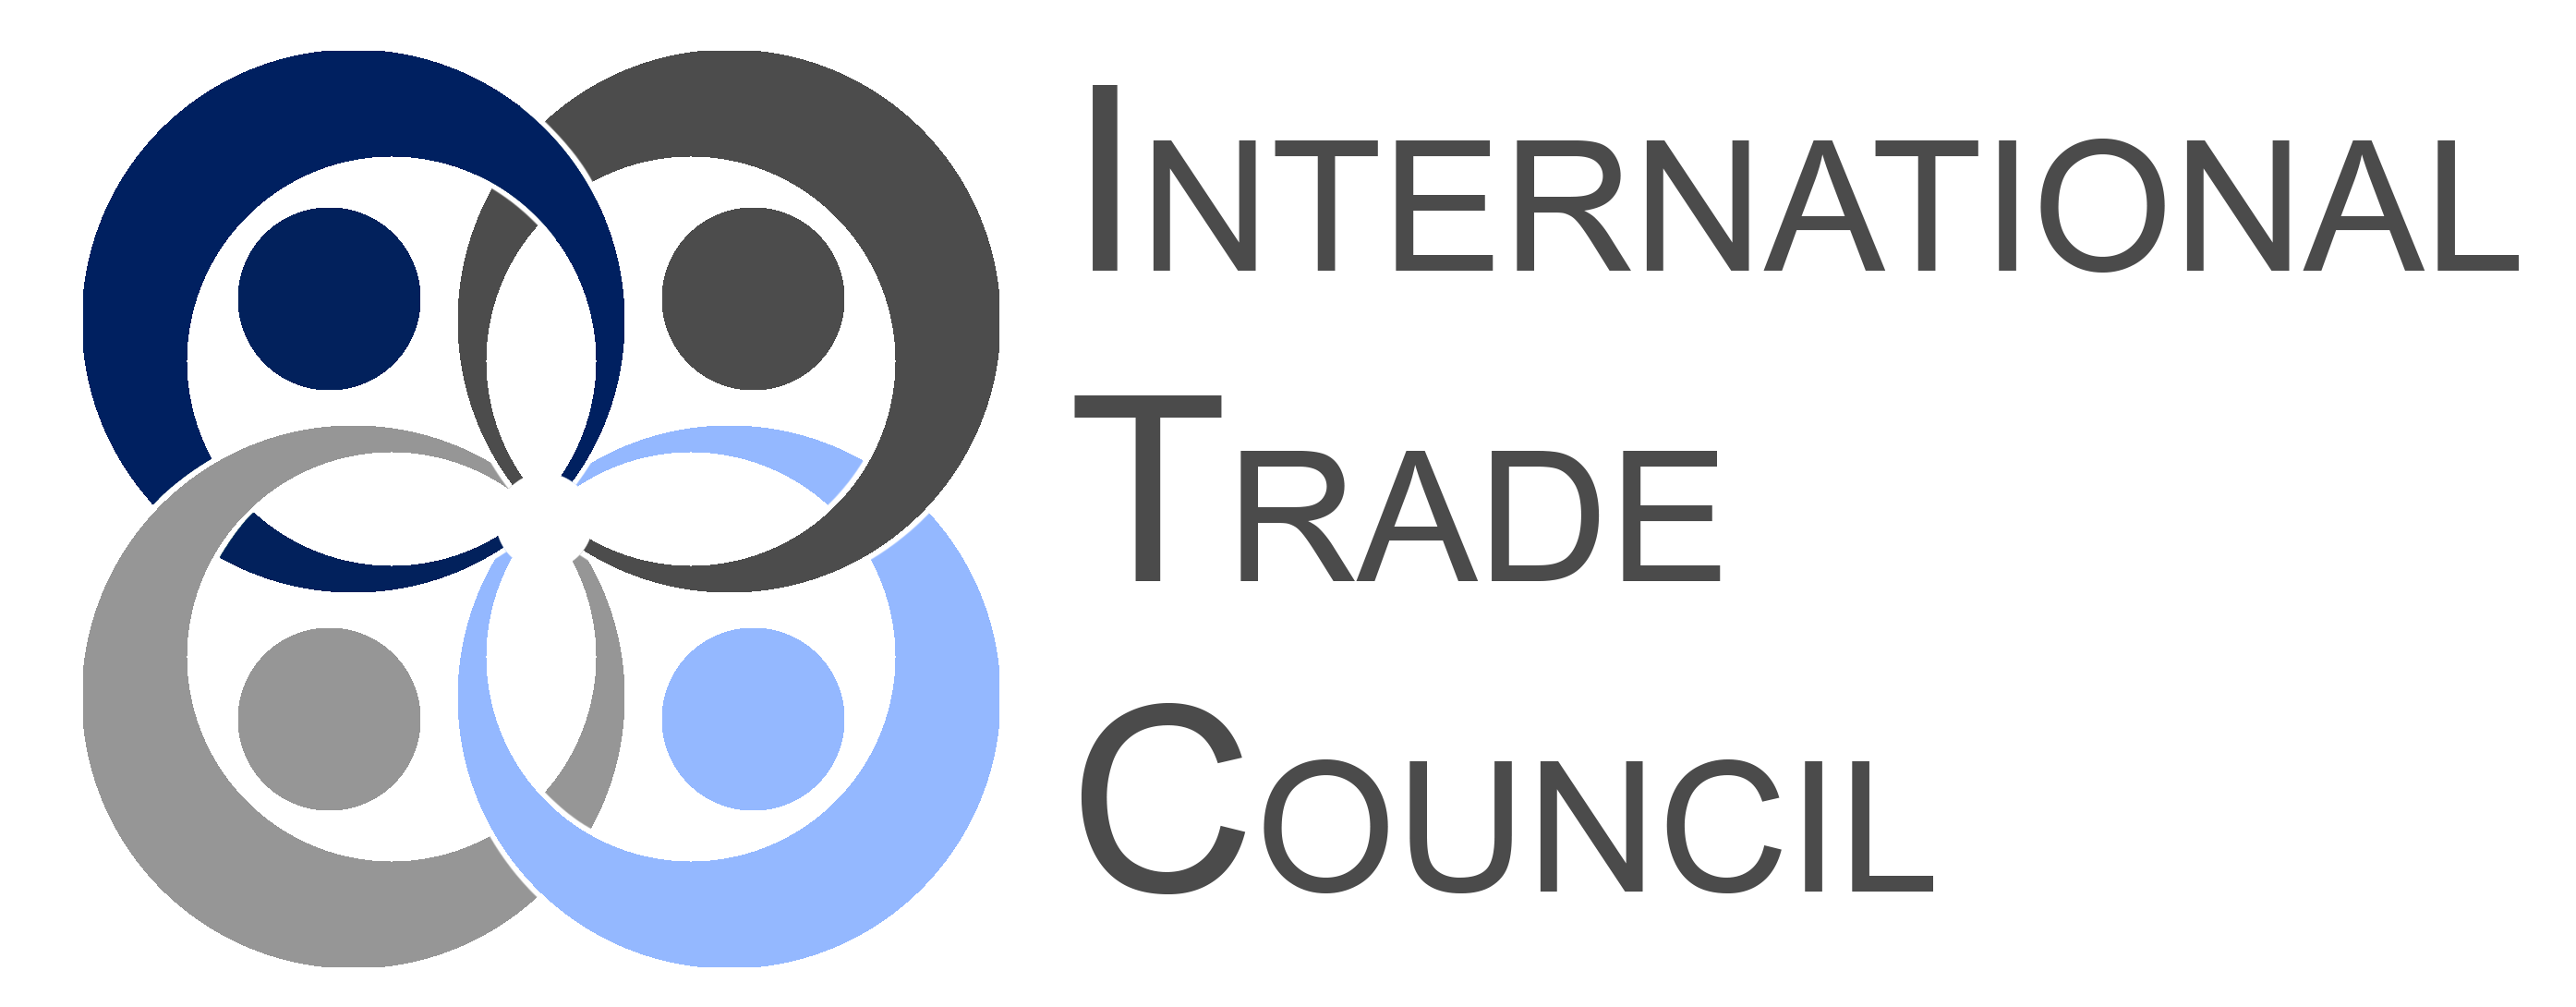 International Trade Council